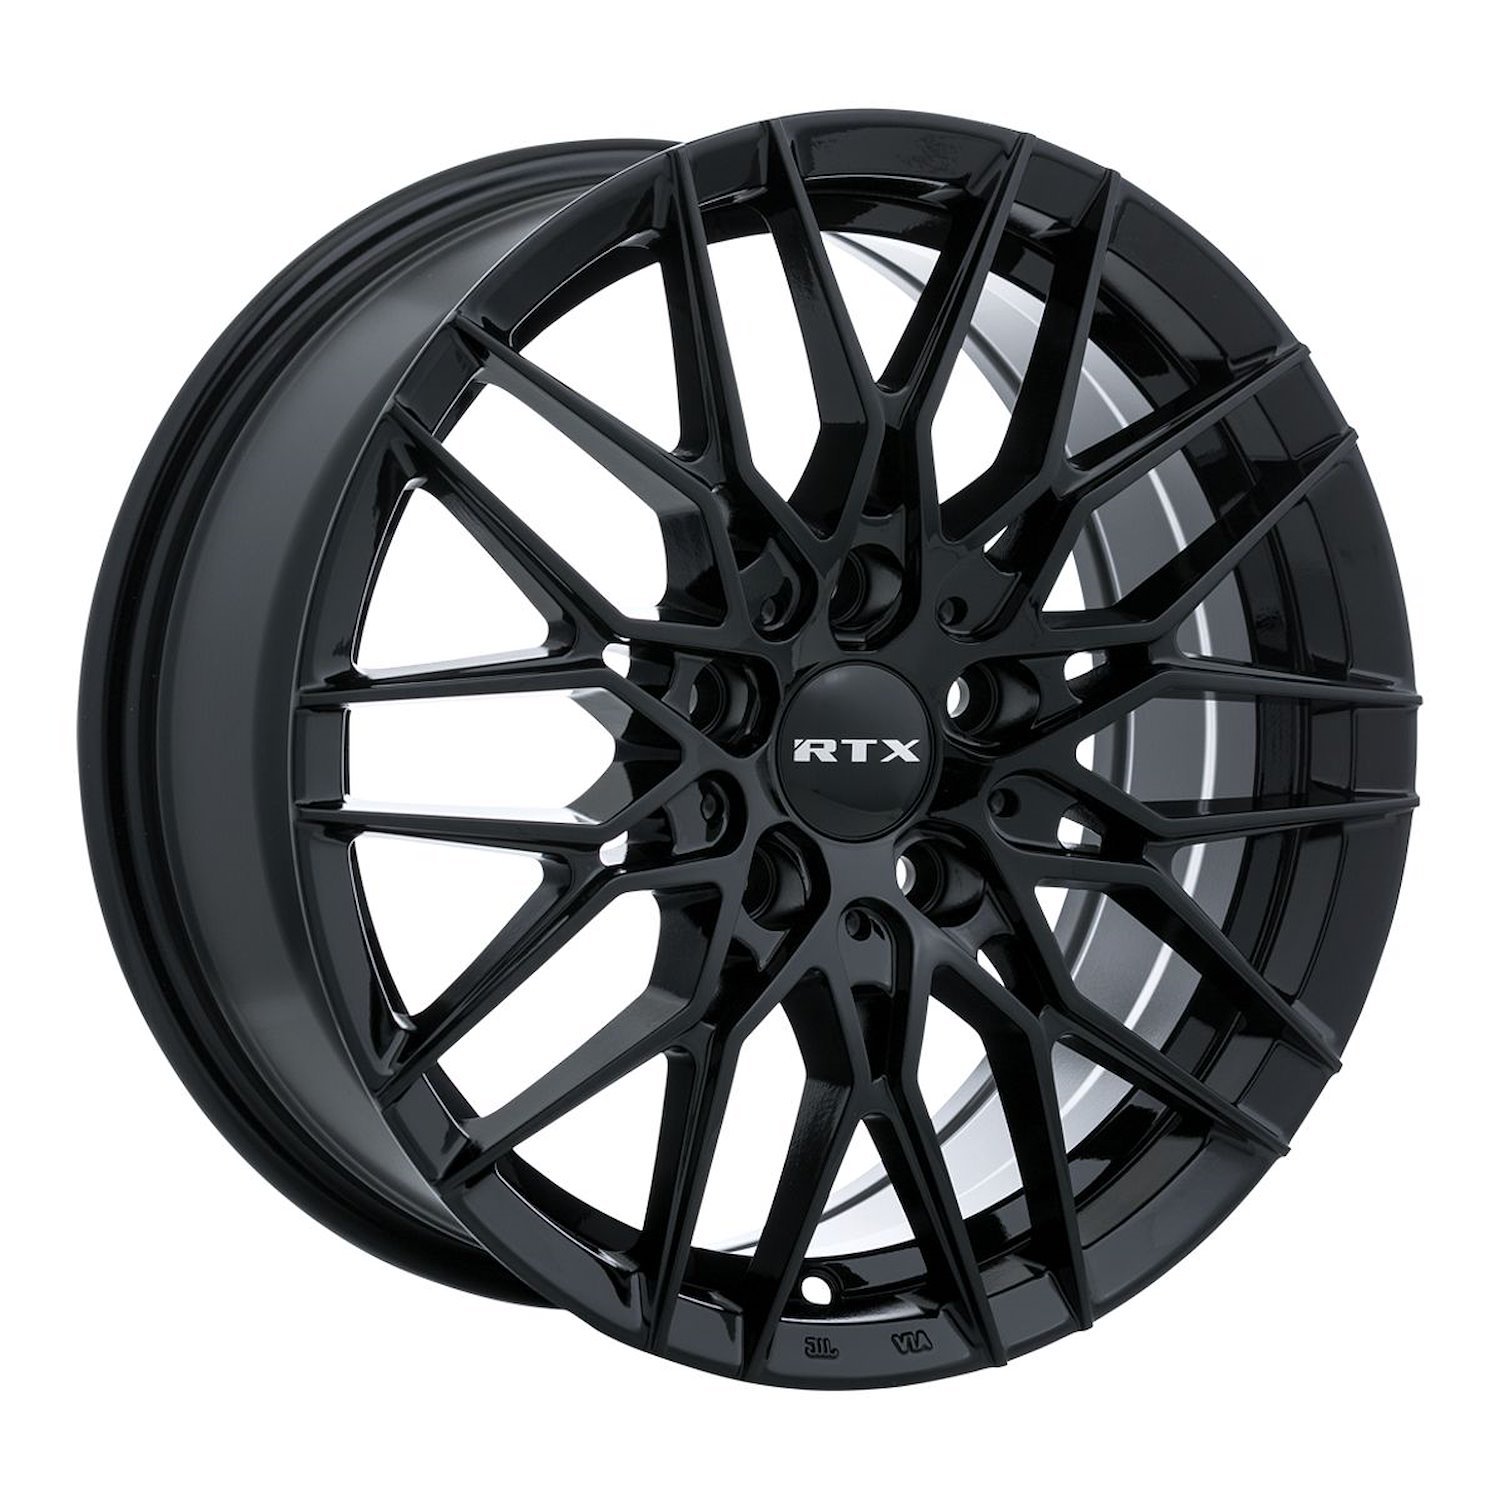 083253 RTX-Series V20 Wheel [Size: 19" x 8"] Gloss Black Finish